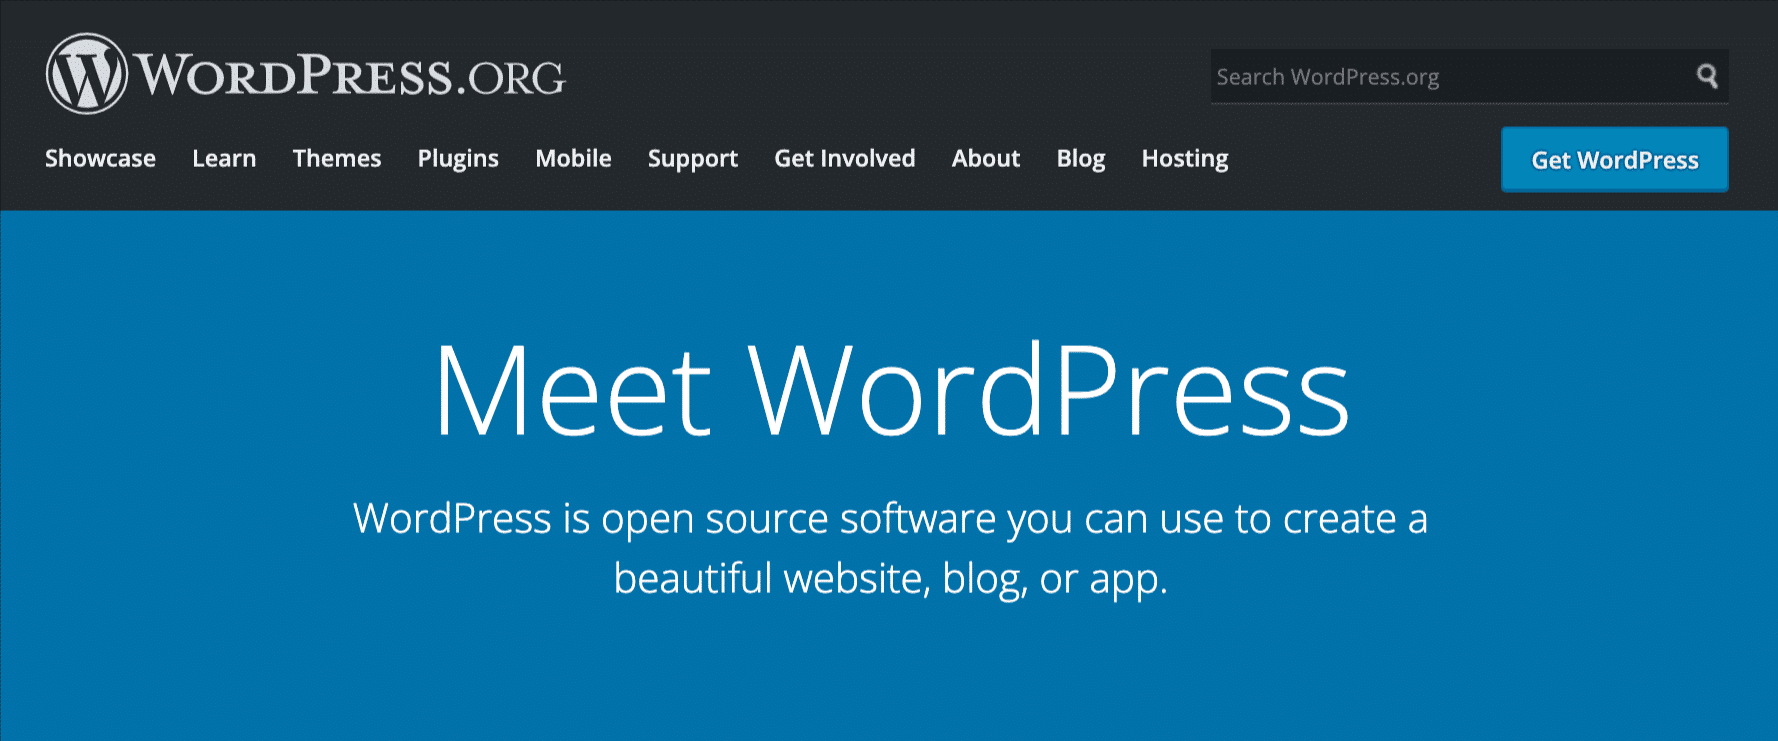 WordPress.org Homepage.